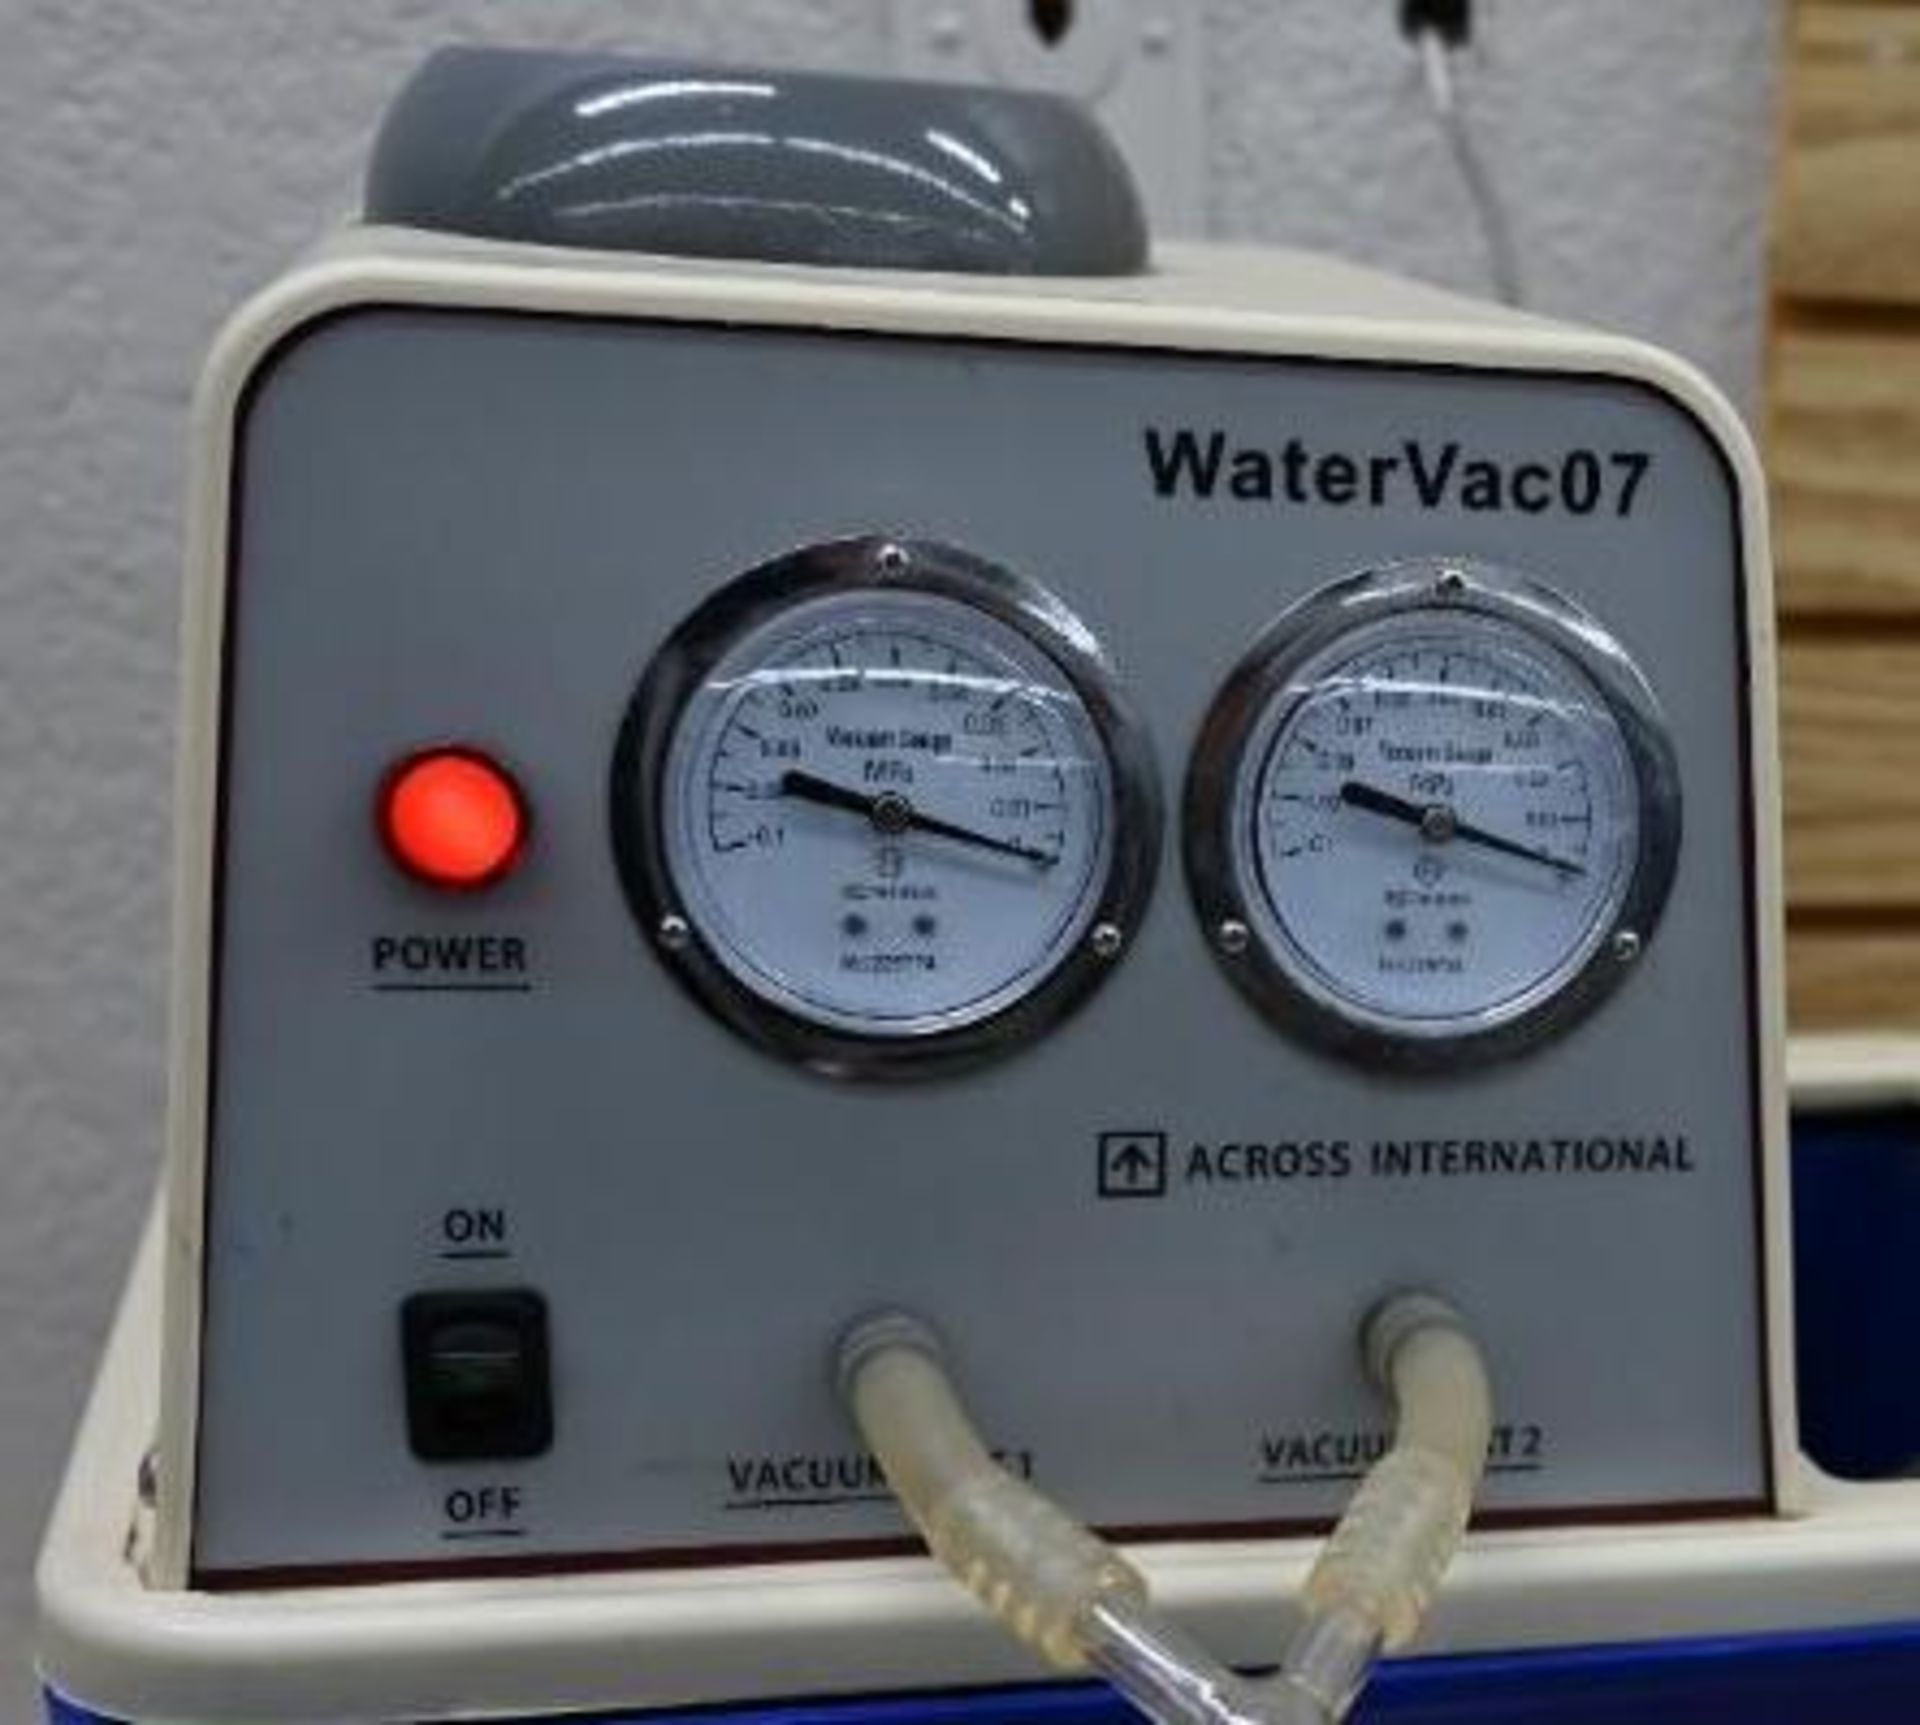 Across International Water Vac 07 Recirculating Water Vacuum Pump - Image 3 of 6